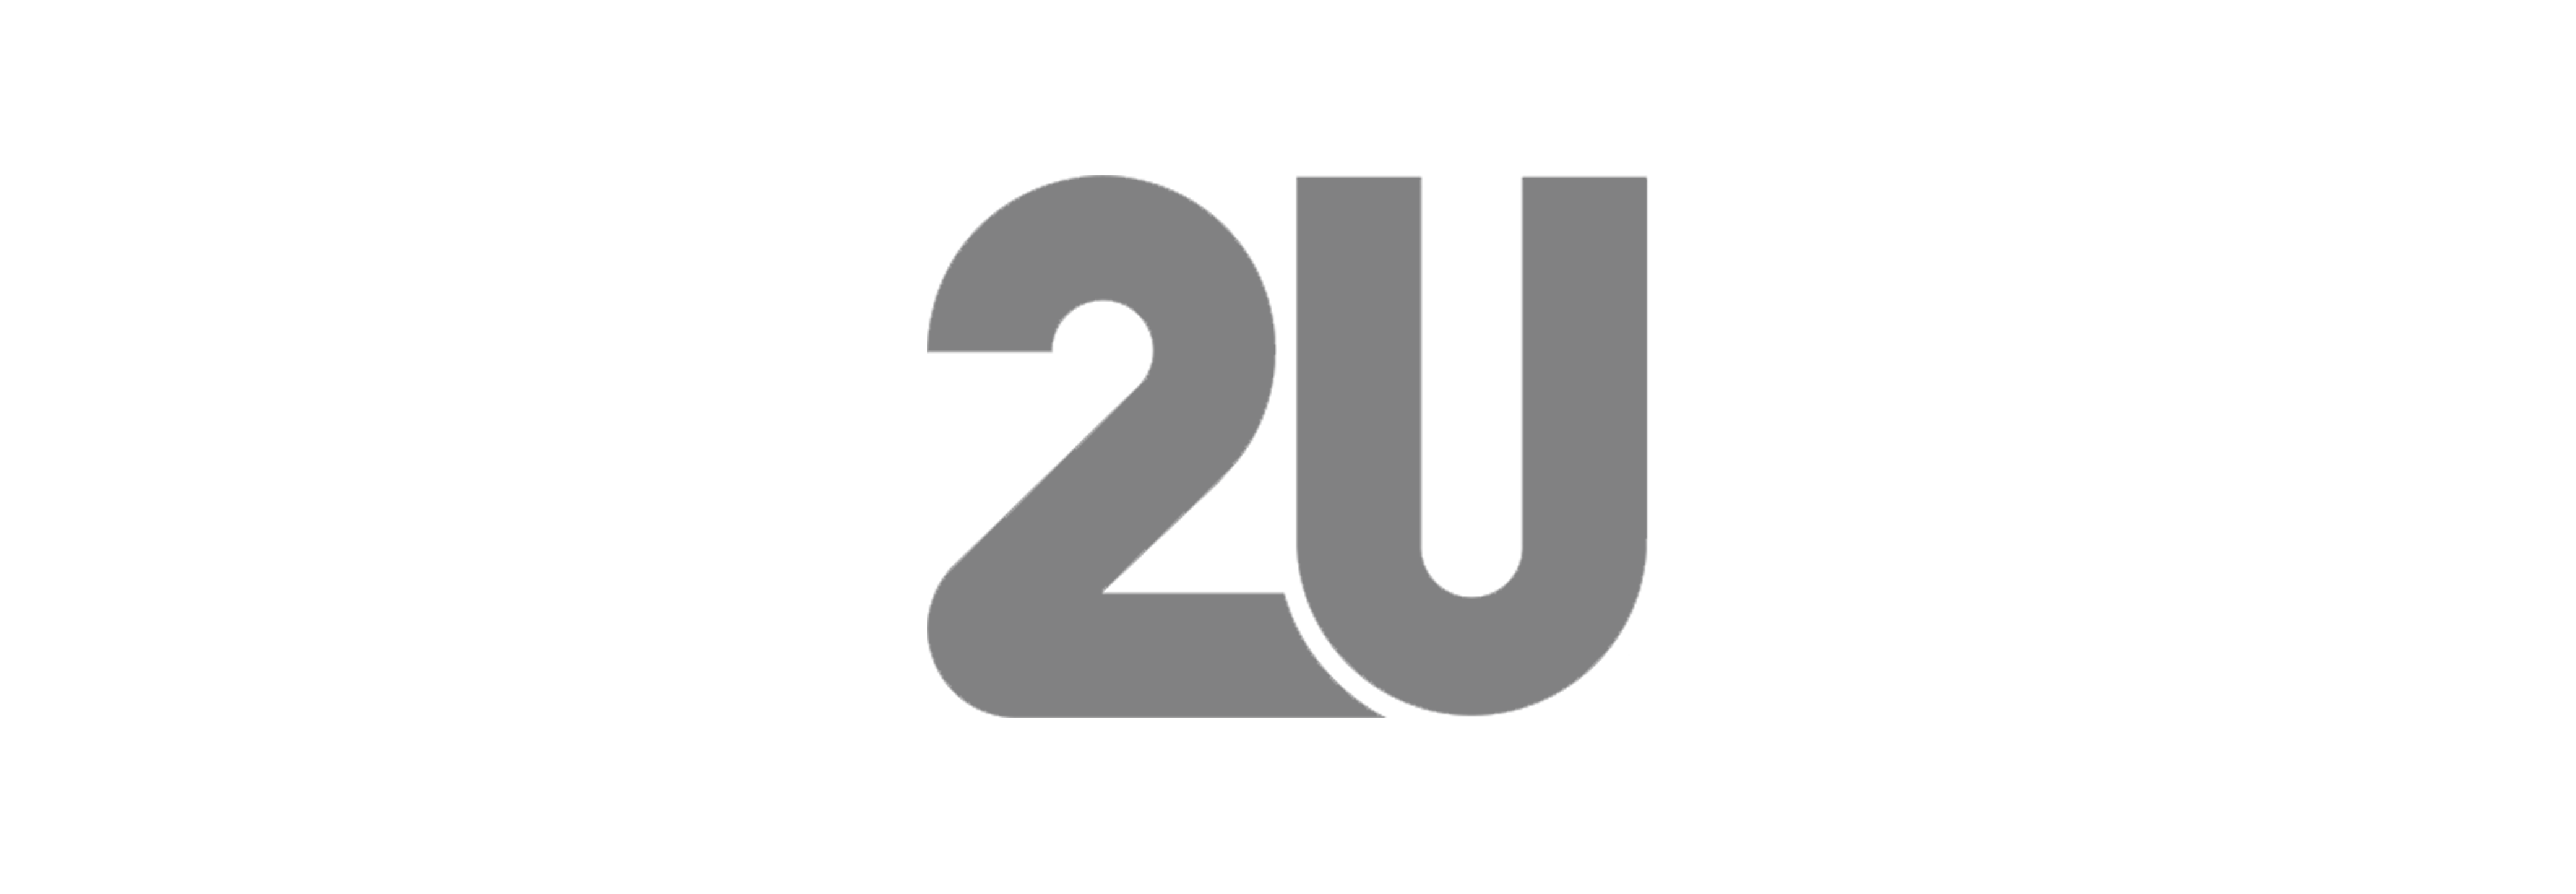 2u logo